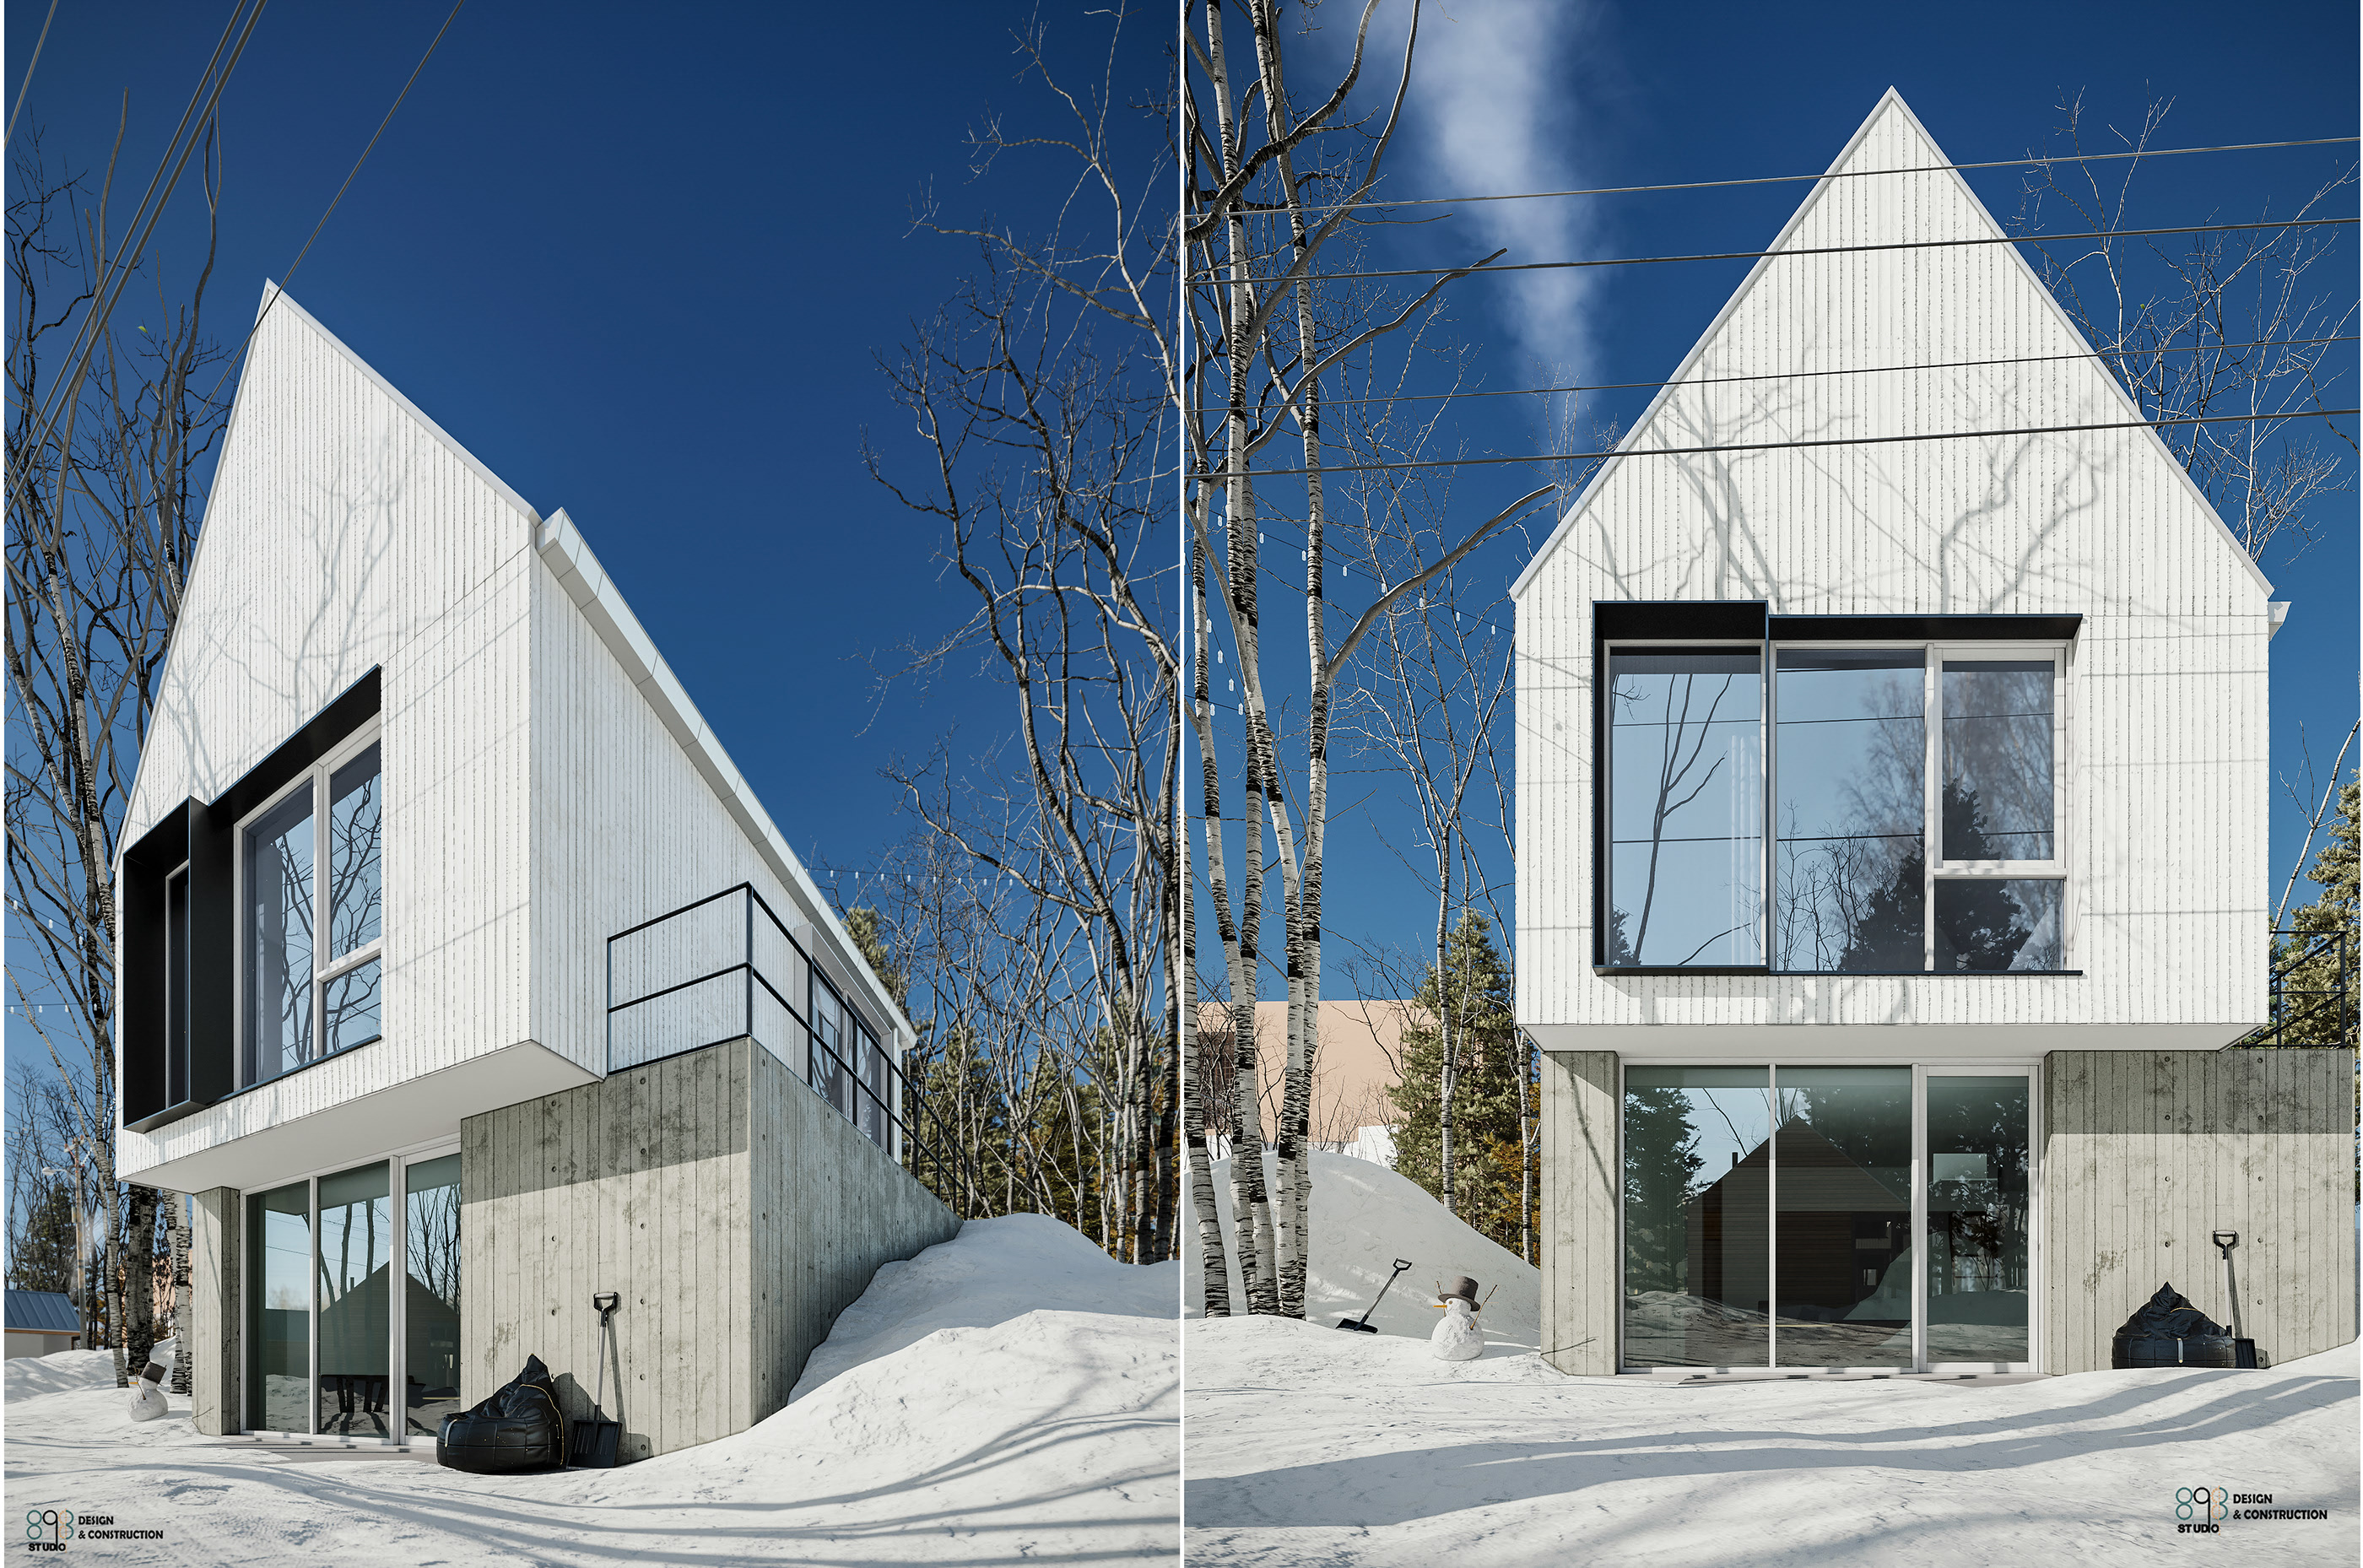 11 Snow-house |CGI Redesign